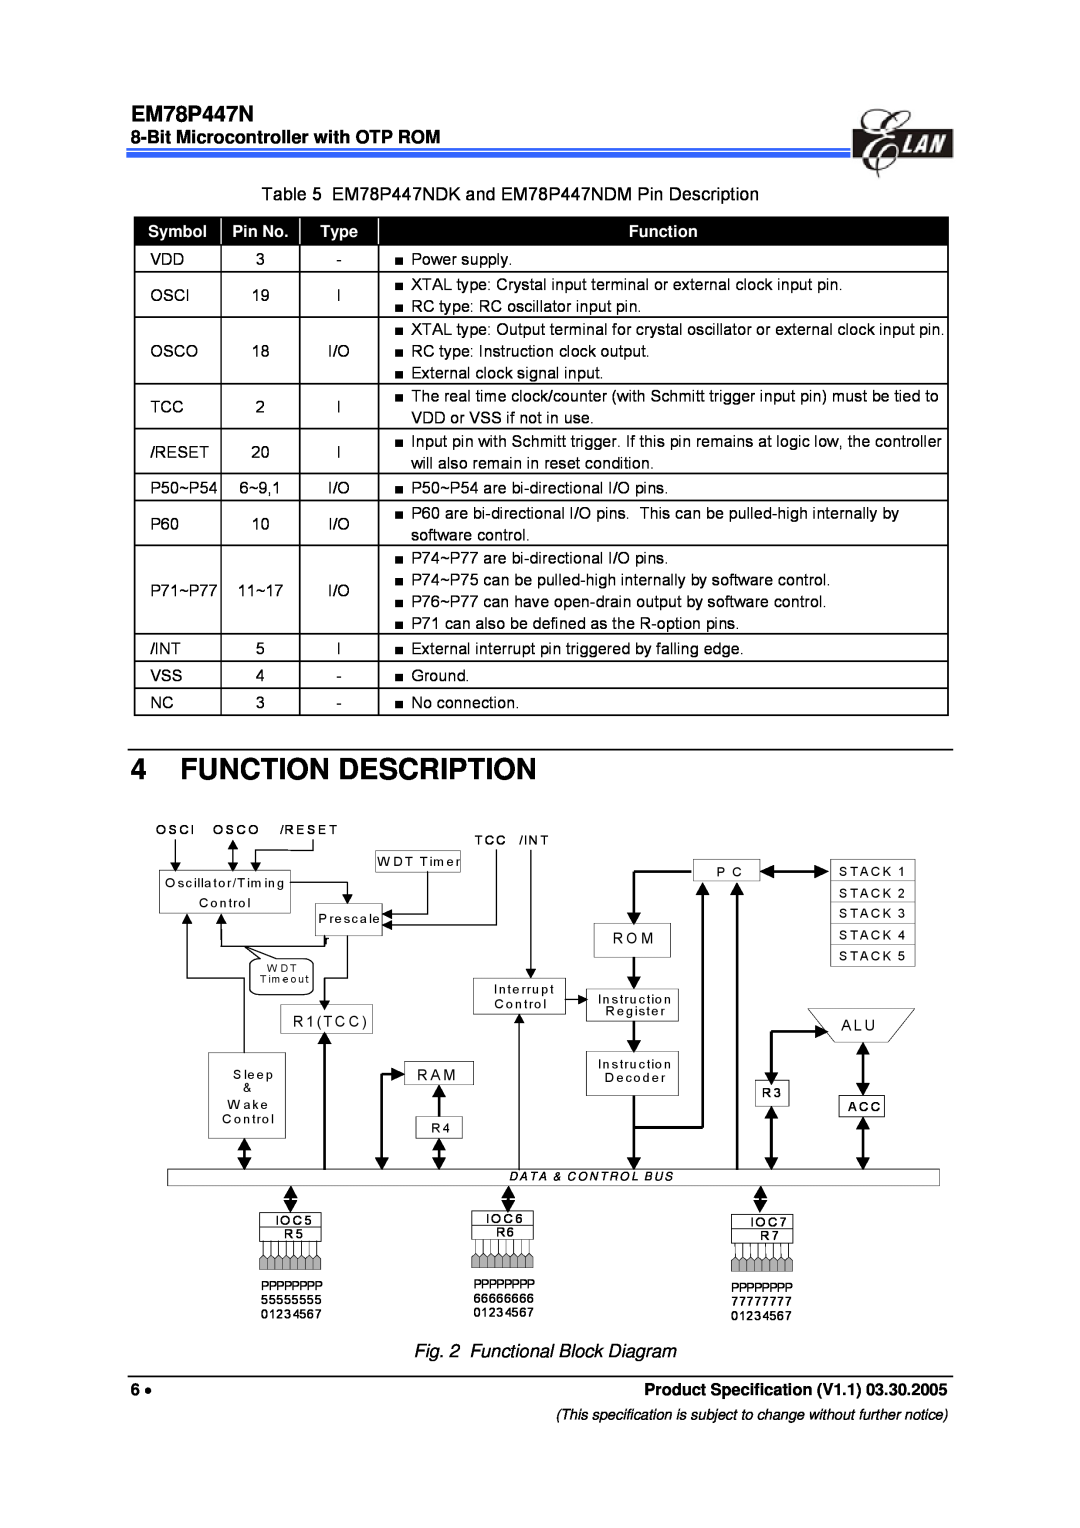 IBM manual Function Description, EM78P447NDK and EM78P447NDM Pin Description, Functional Block Diagram 